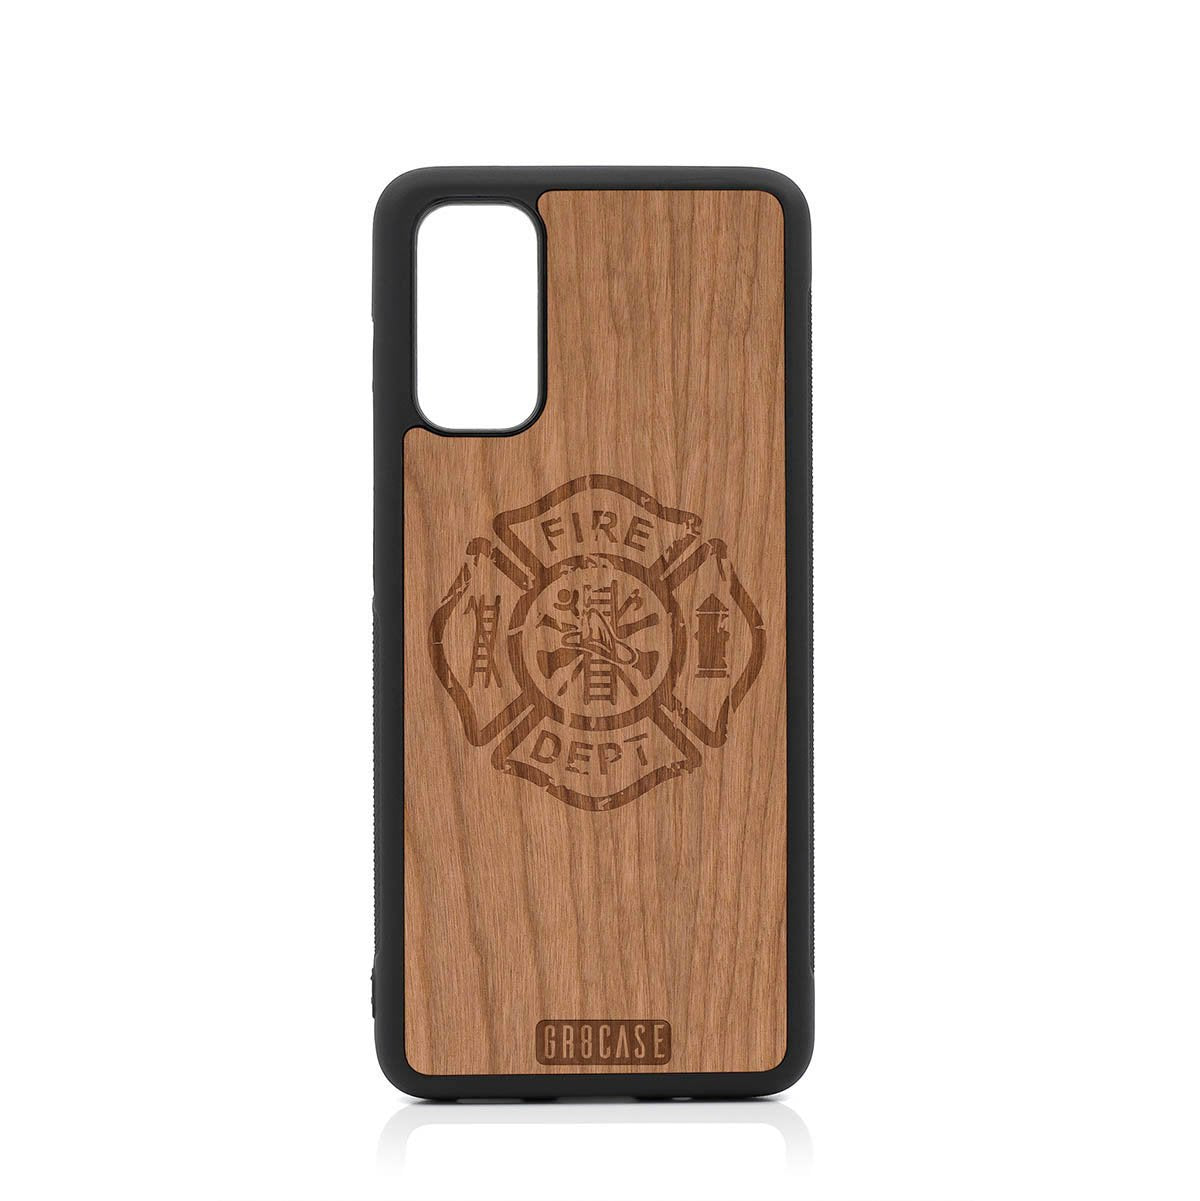 Fire Department Design Wood Case Samsung Galaxy S20 FE 5G by GR8CASE